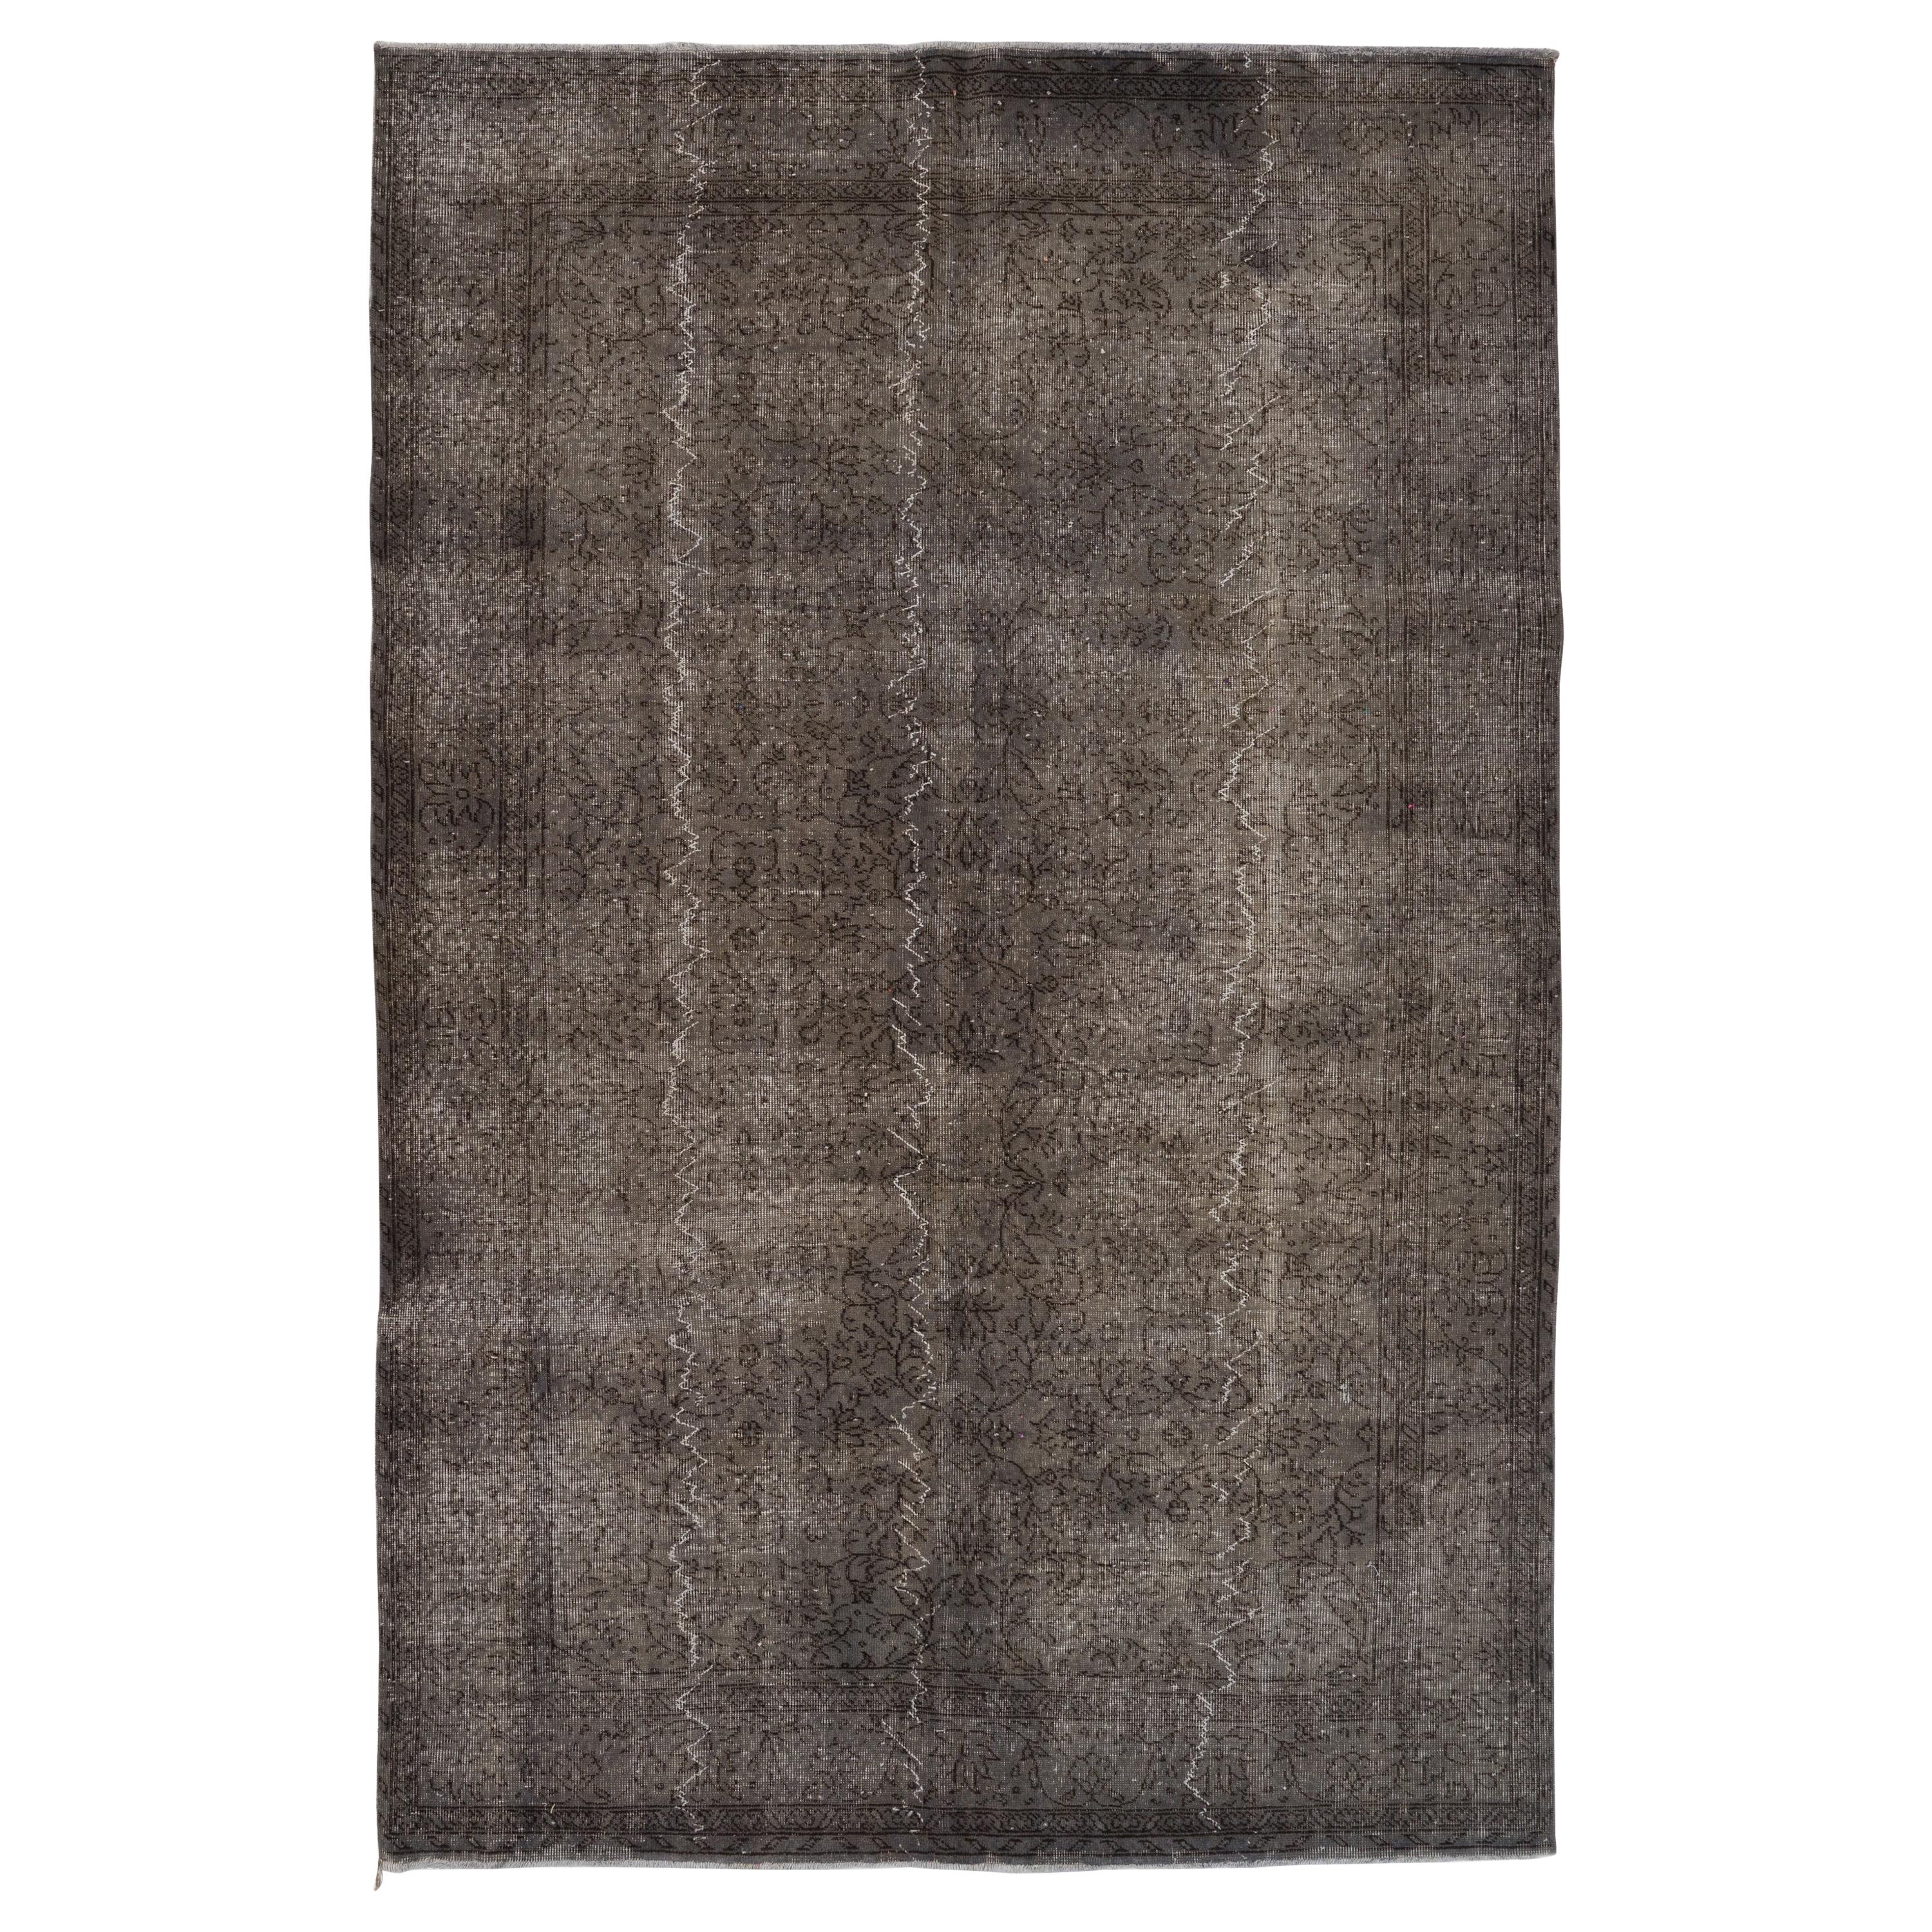 6.5x9.7 Ft Distressed Handmade Rug. Modern Gray Carpet. Turkish Floor Covering For Sale